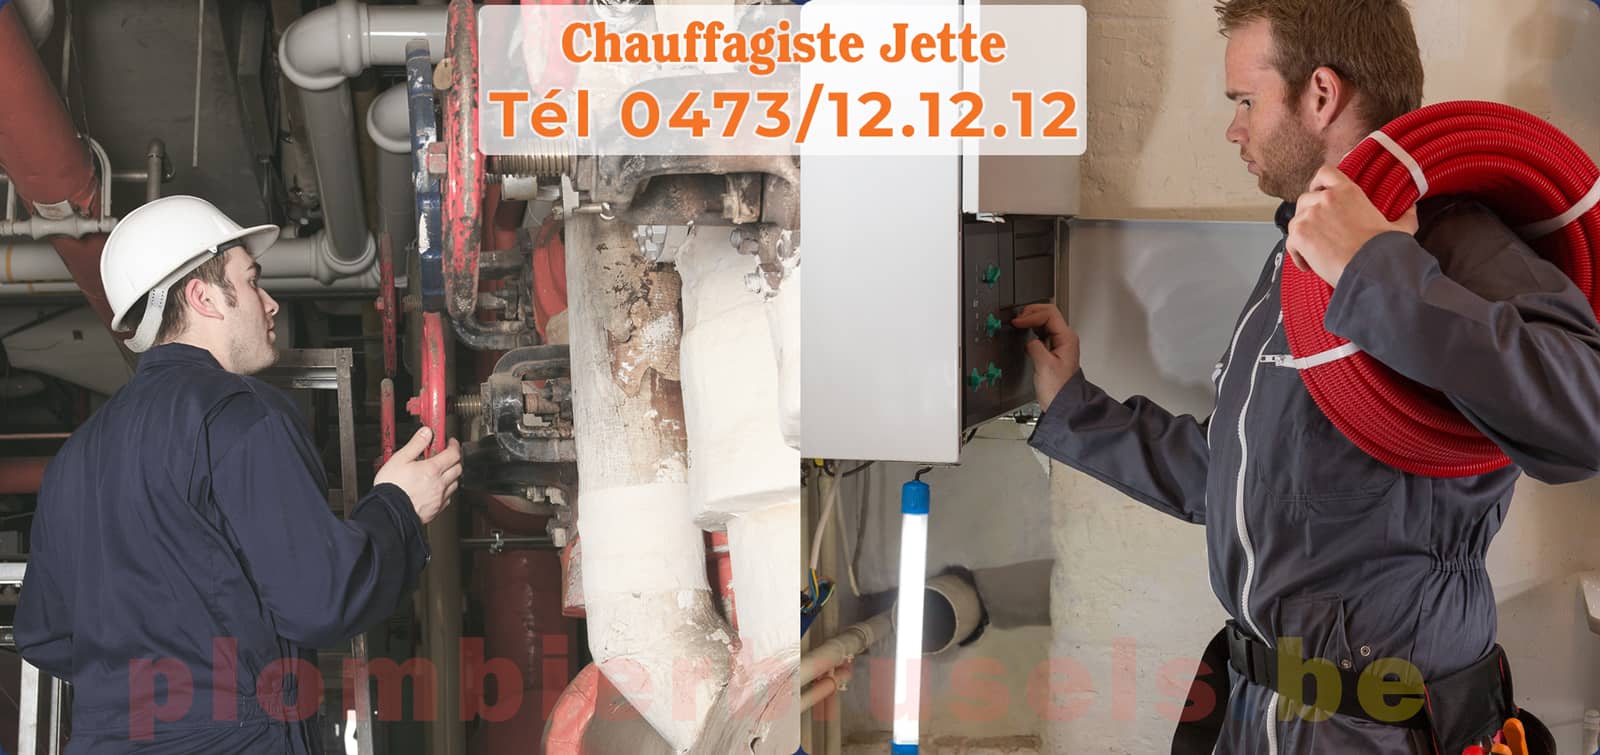 Chauffagiste Jette service de Chauffage tél 0473/12.12.12